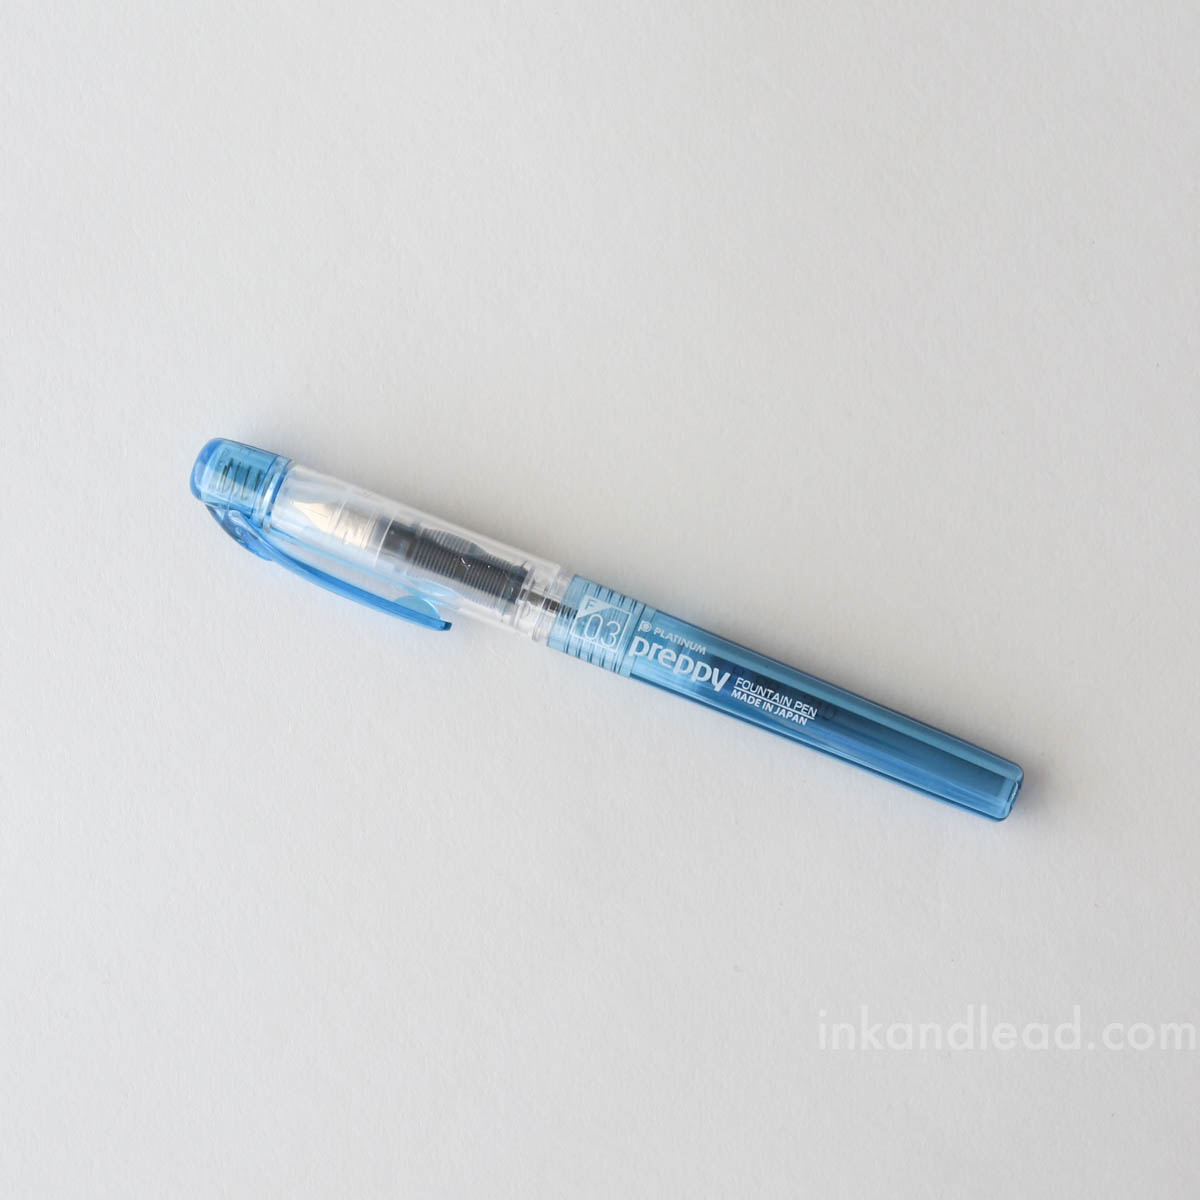 Platinum Preppy Fountain Pen, 0.3 Fine Nib - Blue Black